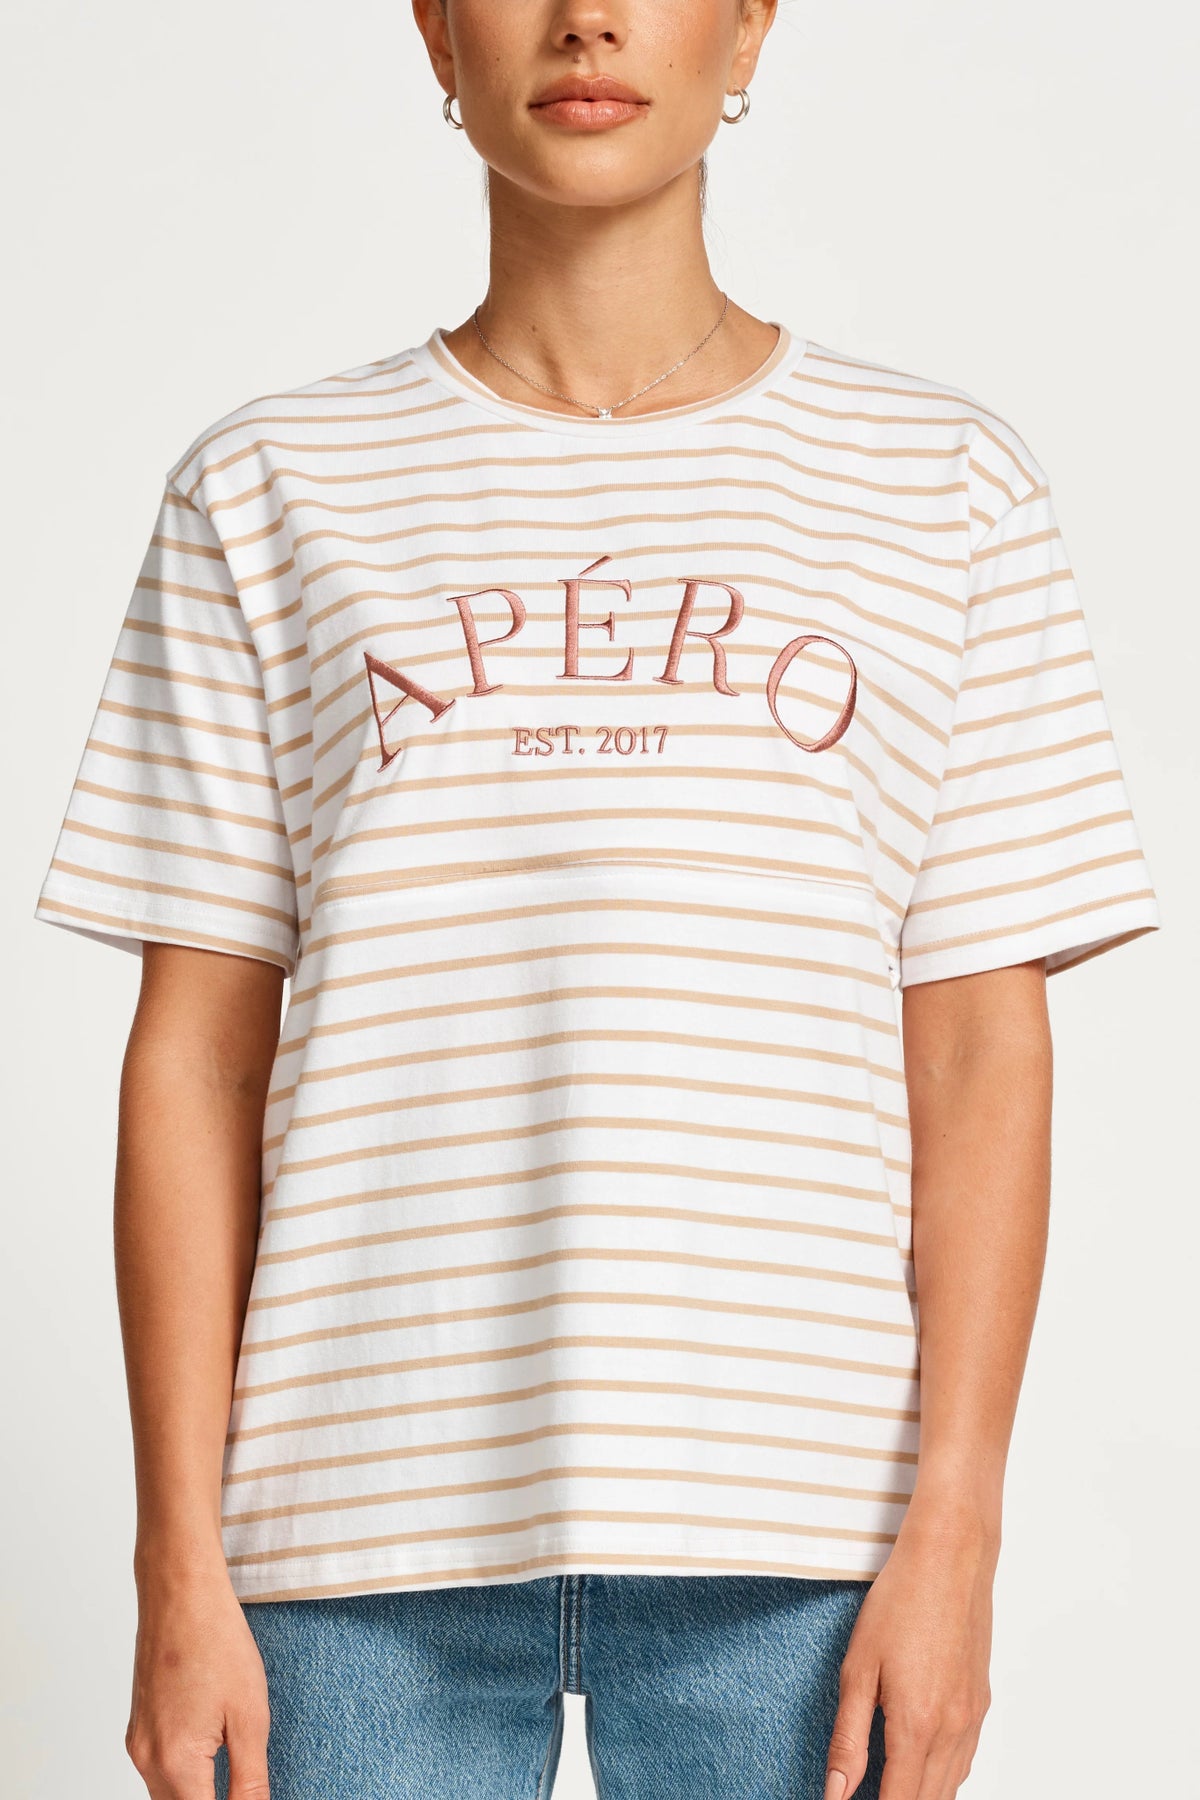 Heritage Stripe Panel Tee - White / Beige / Plum - Sare StoreApero LabelTshirt